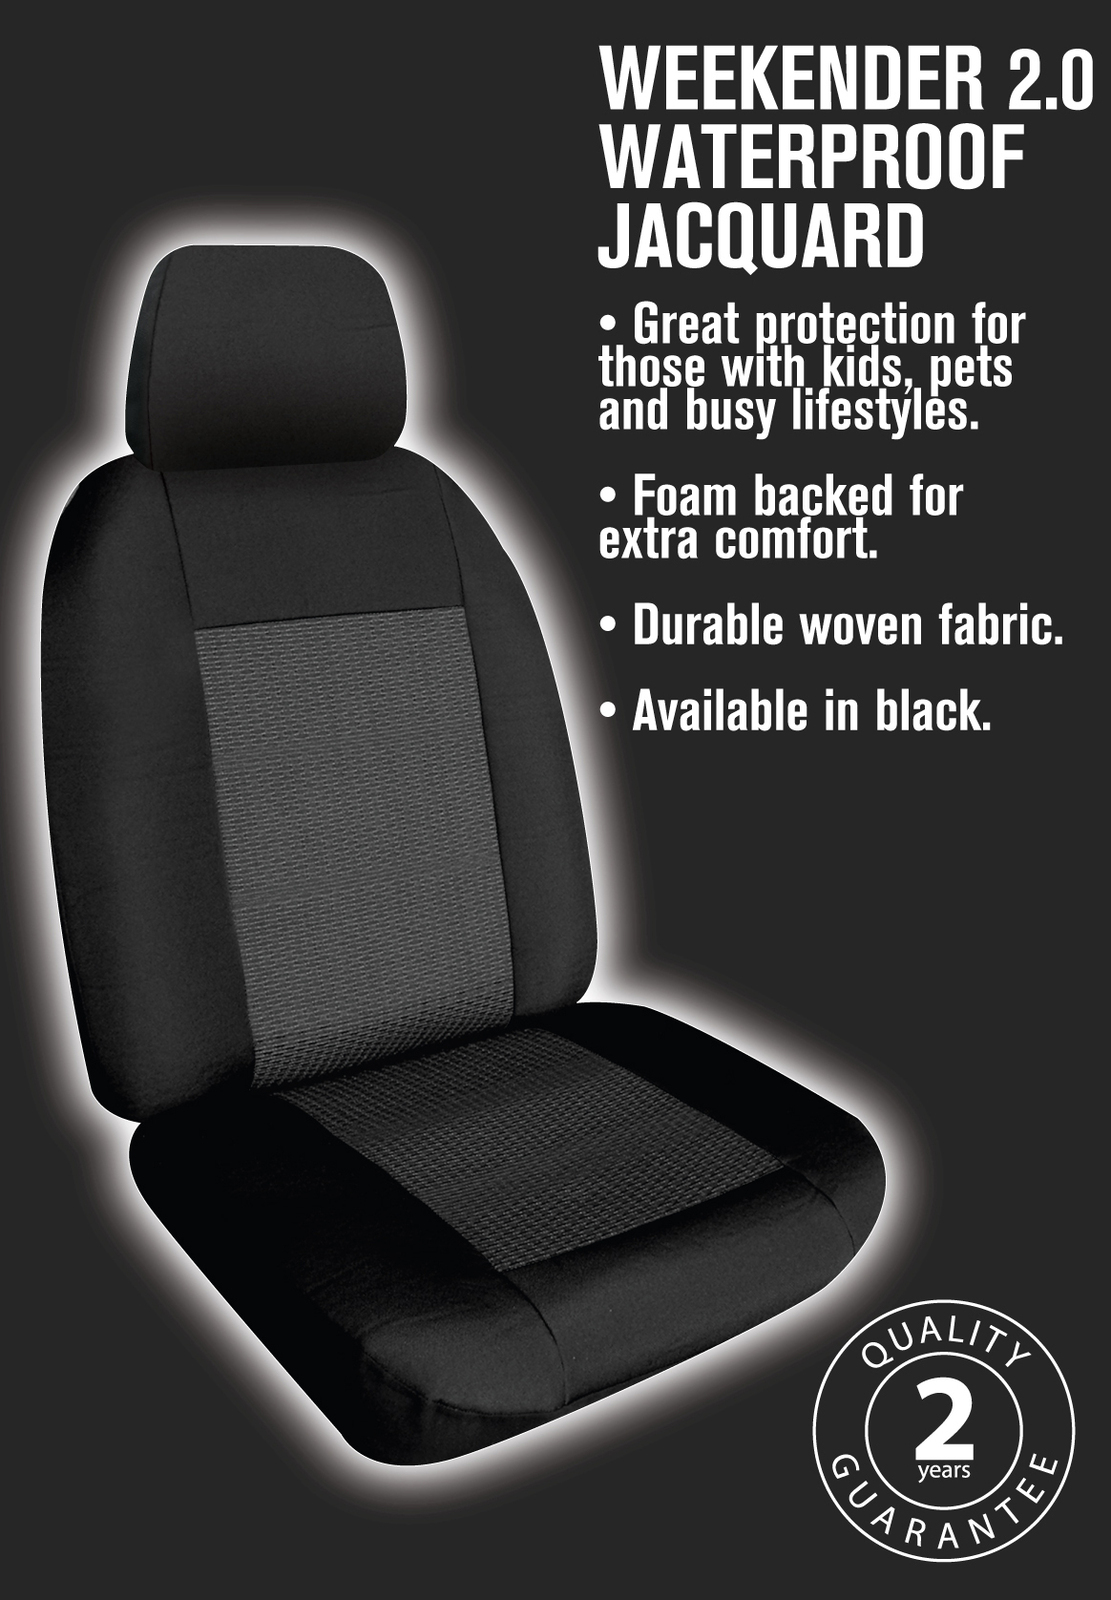 Sperling Seat Cover REAR G2B (GETAWAY NEOPRENE BLACK)